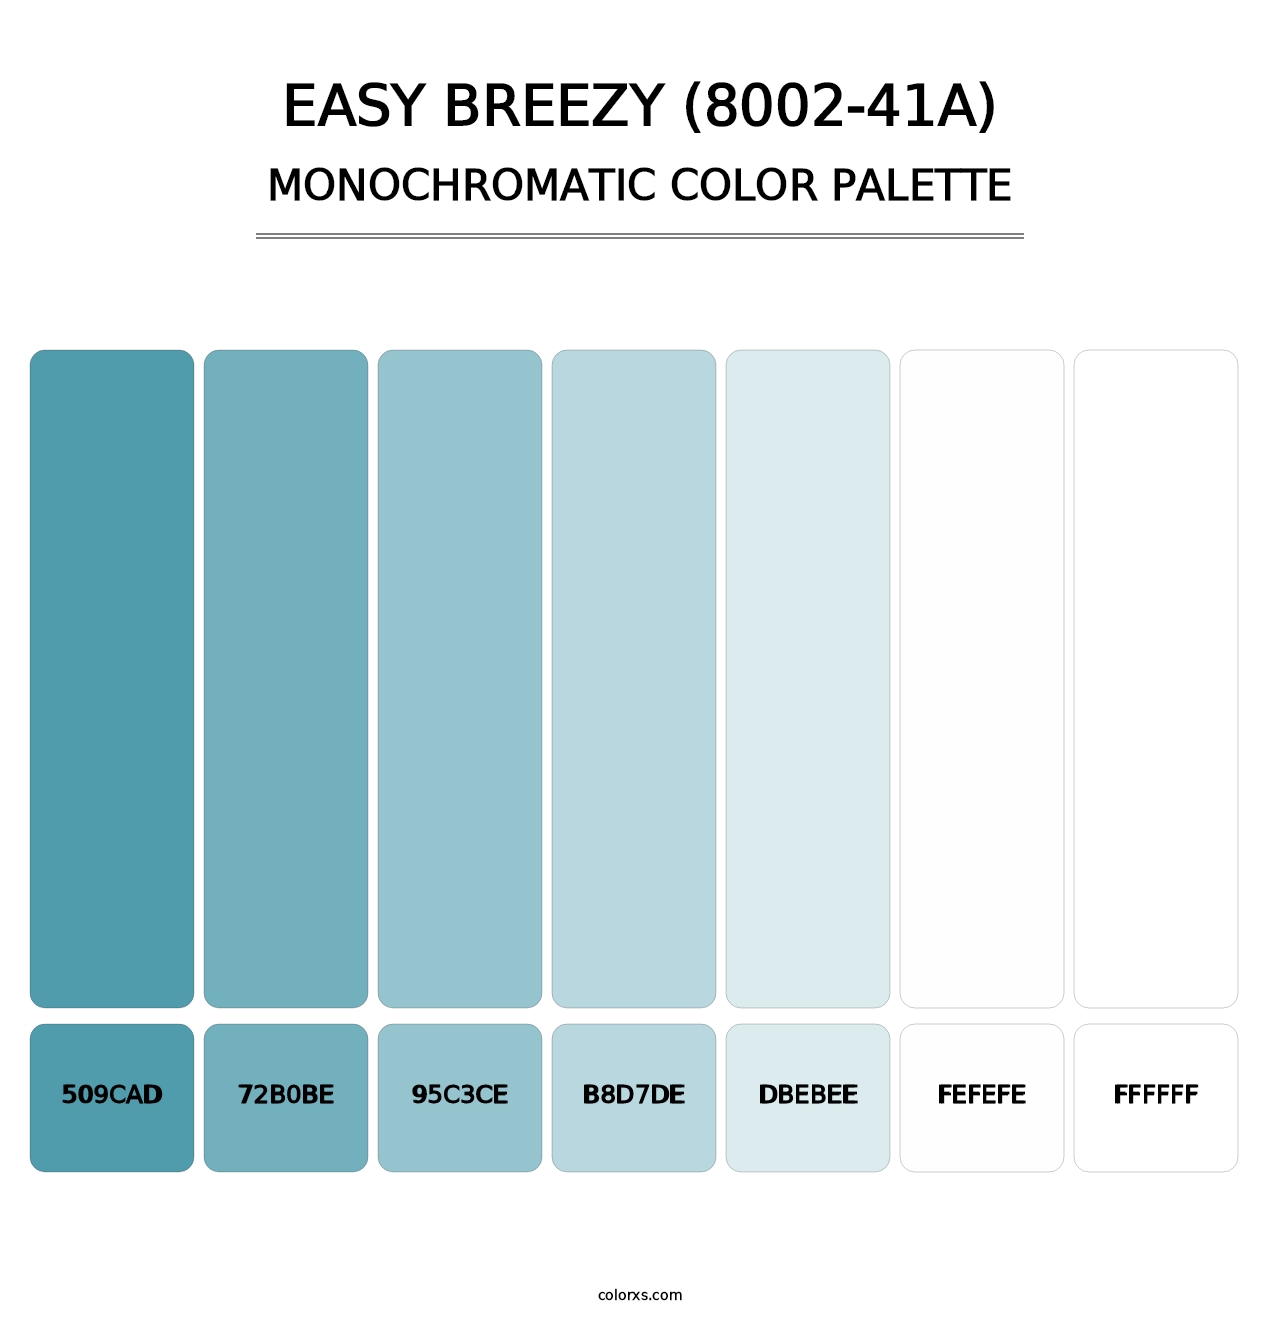 Easy Breezy (8002-41A) - Monochromatic Color Palette